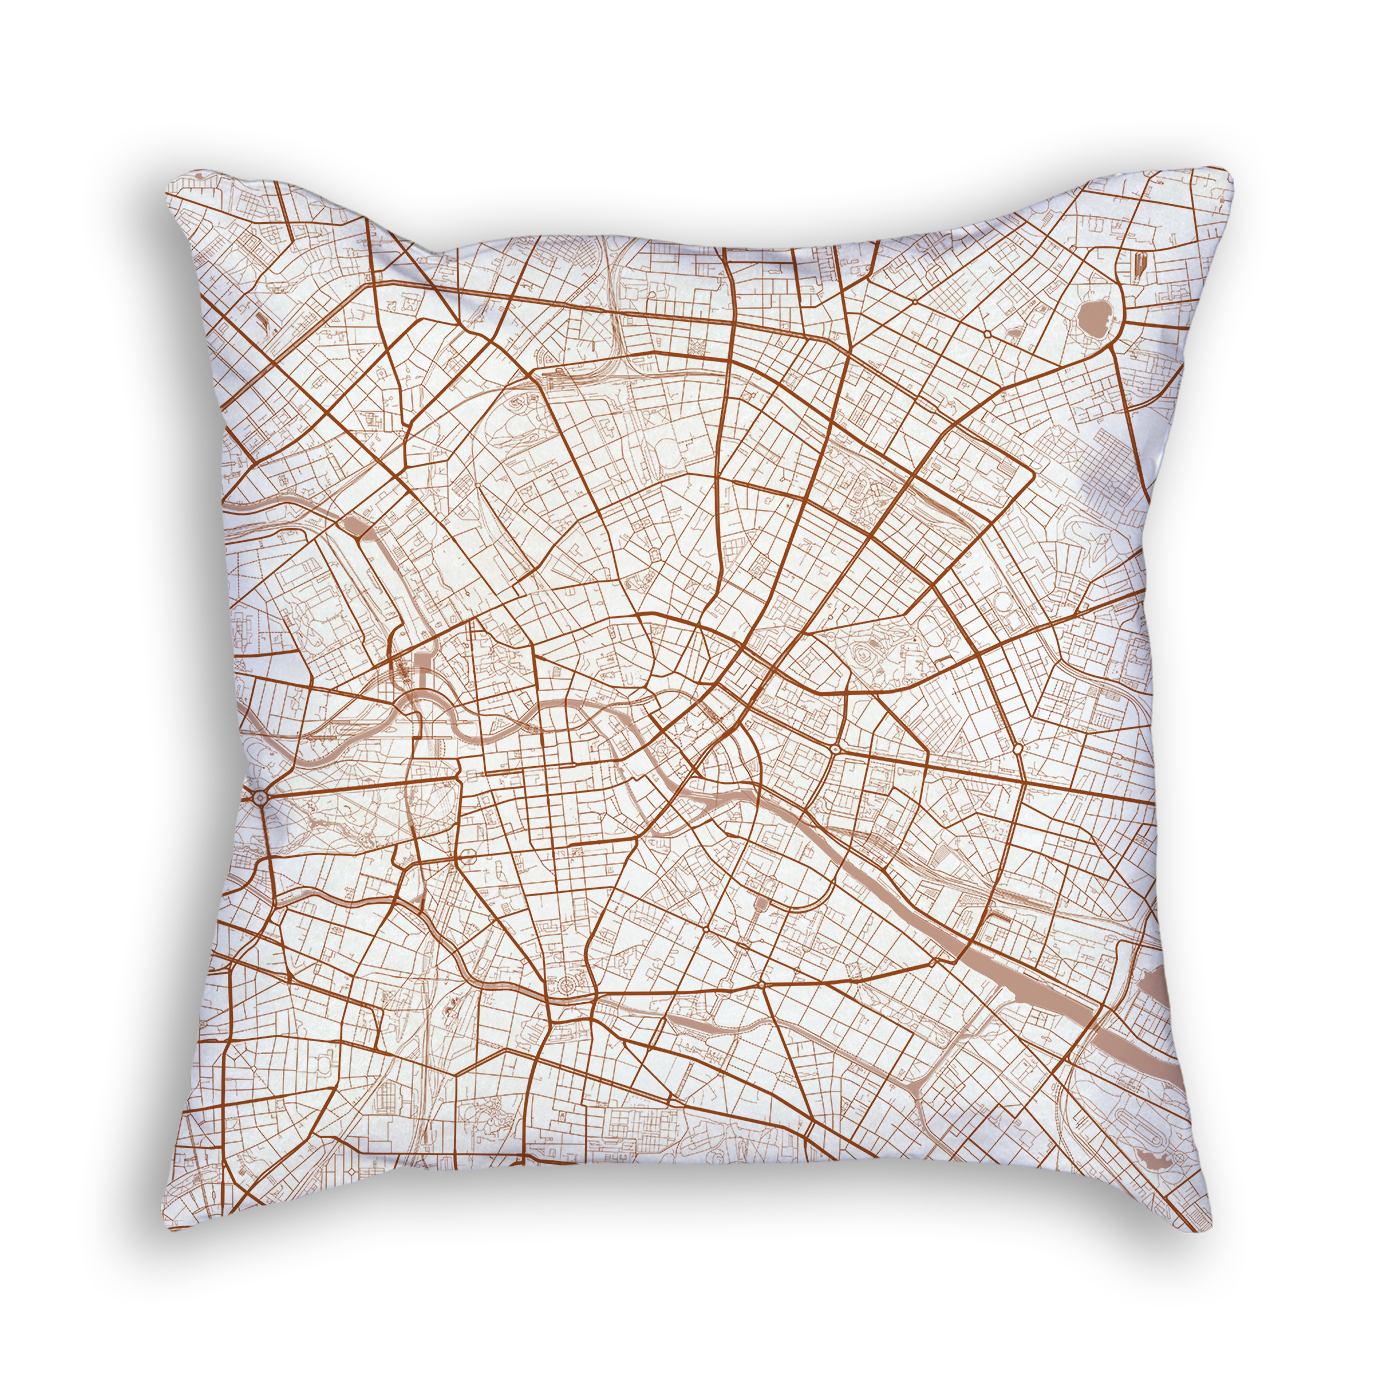 Berlin Germany City Map Art Decorative Throw Pillow